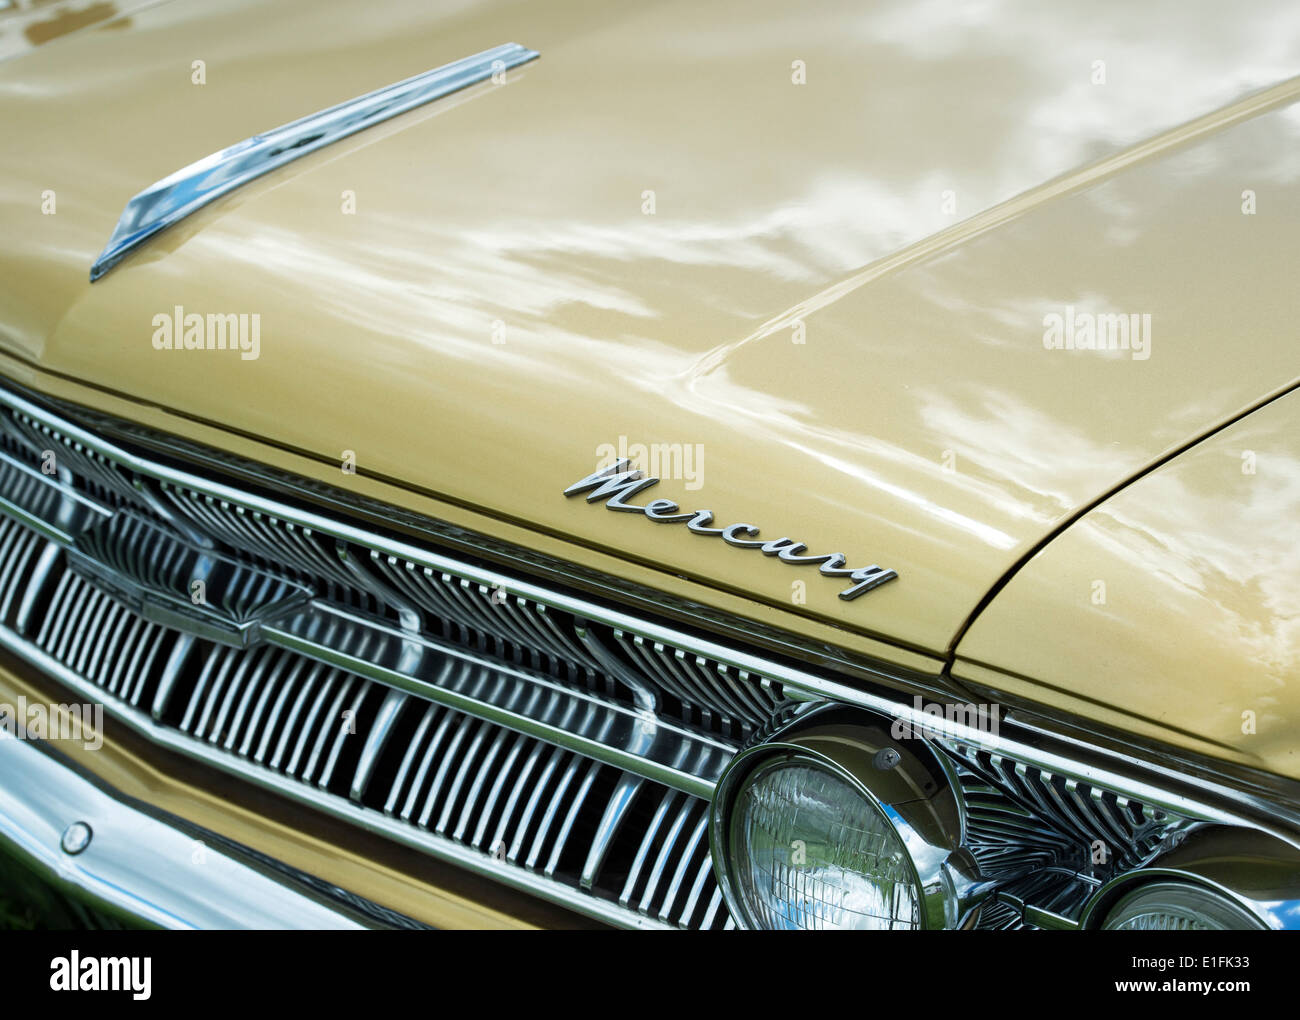 Mercury Monterey Marauder. Classic American car Stock Photo